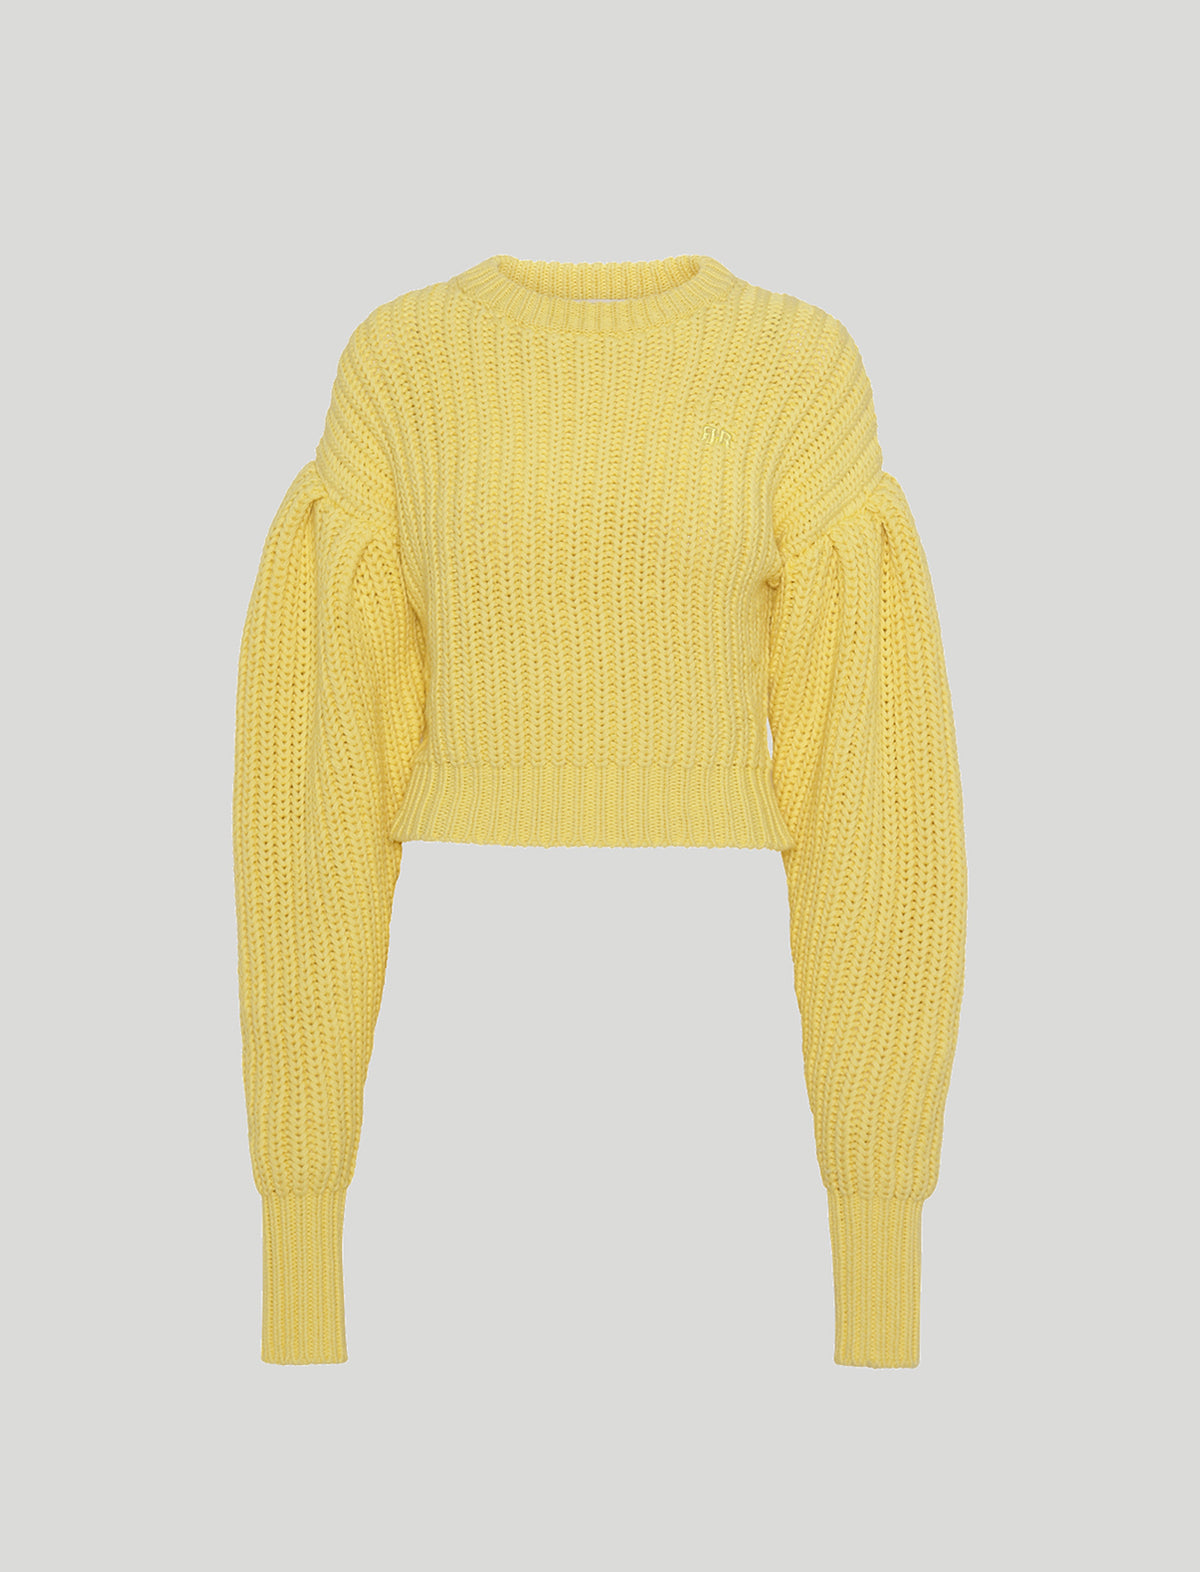 ROTATE Birger Christensen Adley Knit Sweater in Yellow Cream